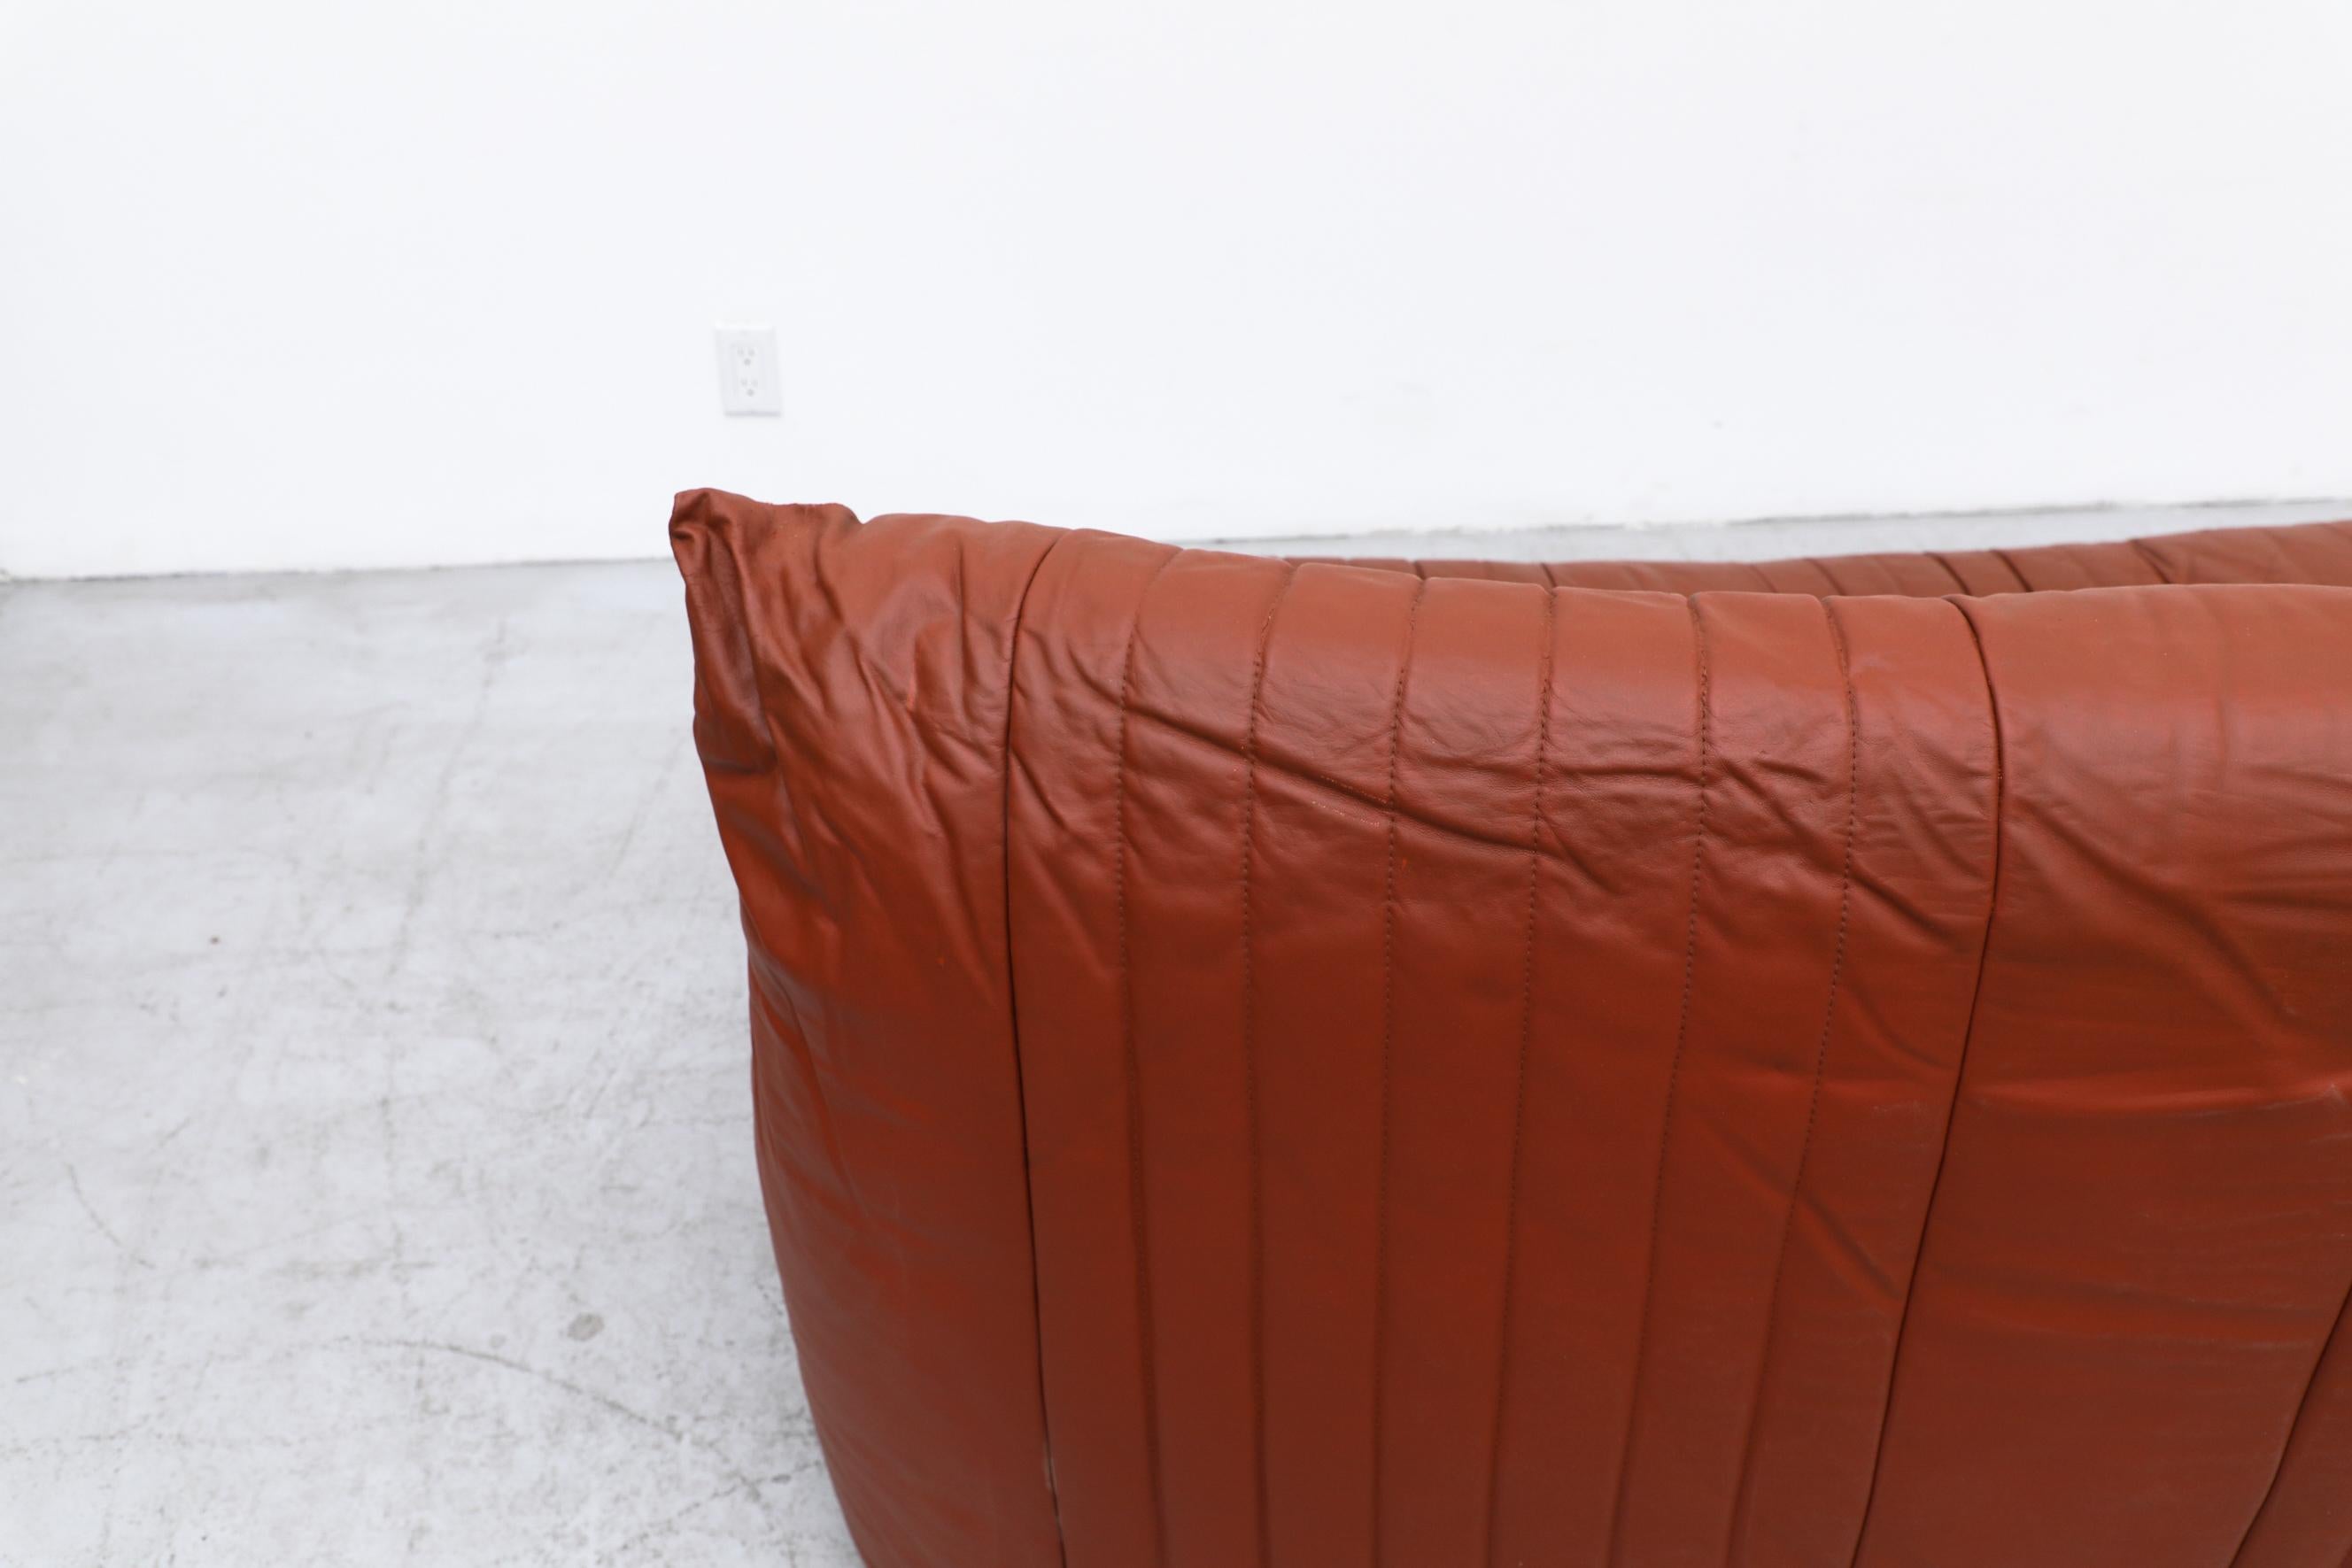 Leather Ligne Roset 'Aralia' Sofa by Michel Ducaroy